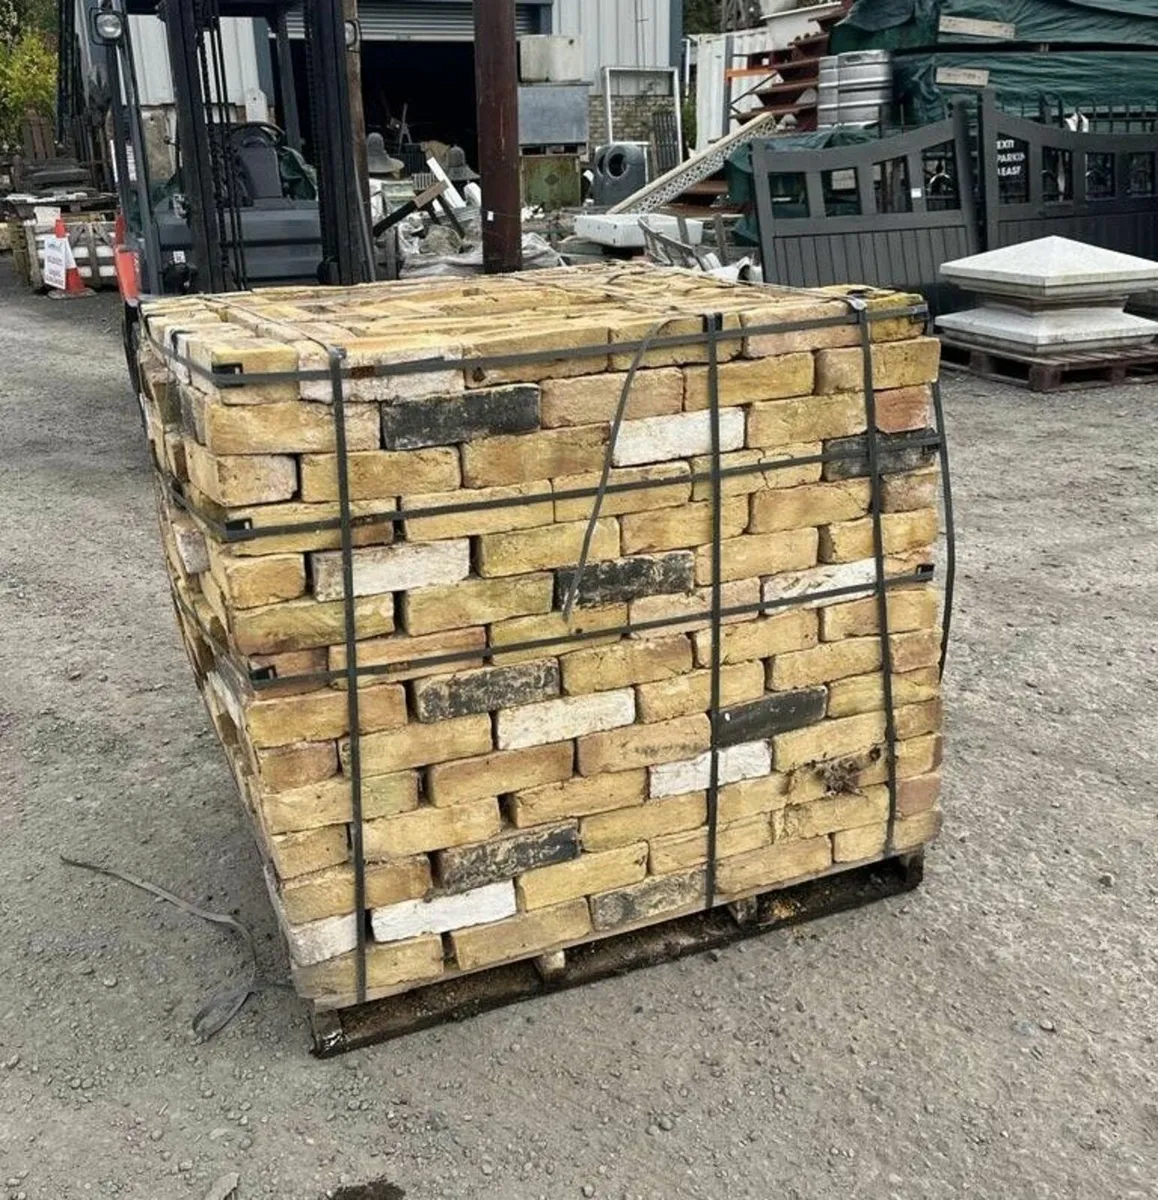 New Rustic Bricks - REDUCED